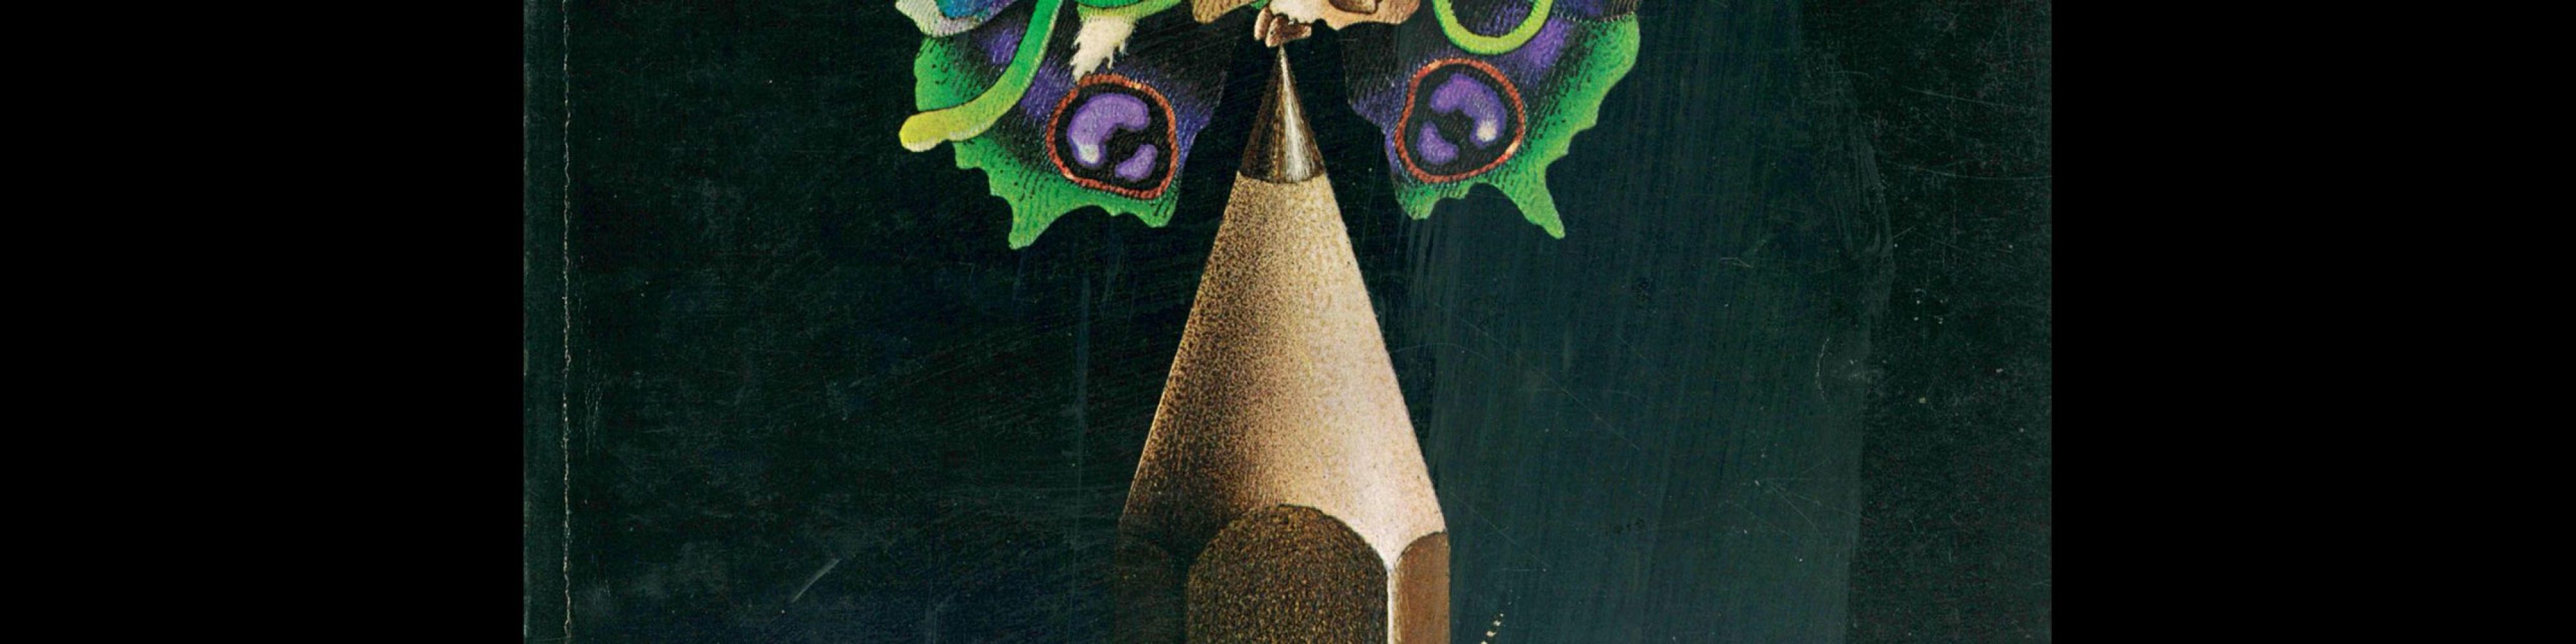 Novum Gebrauchsgraphik, 4, 1975. Cover design by Patrick Couratin + Henri Galeron